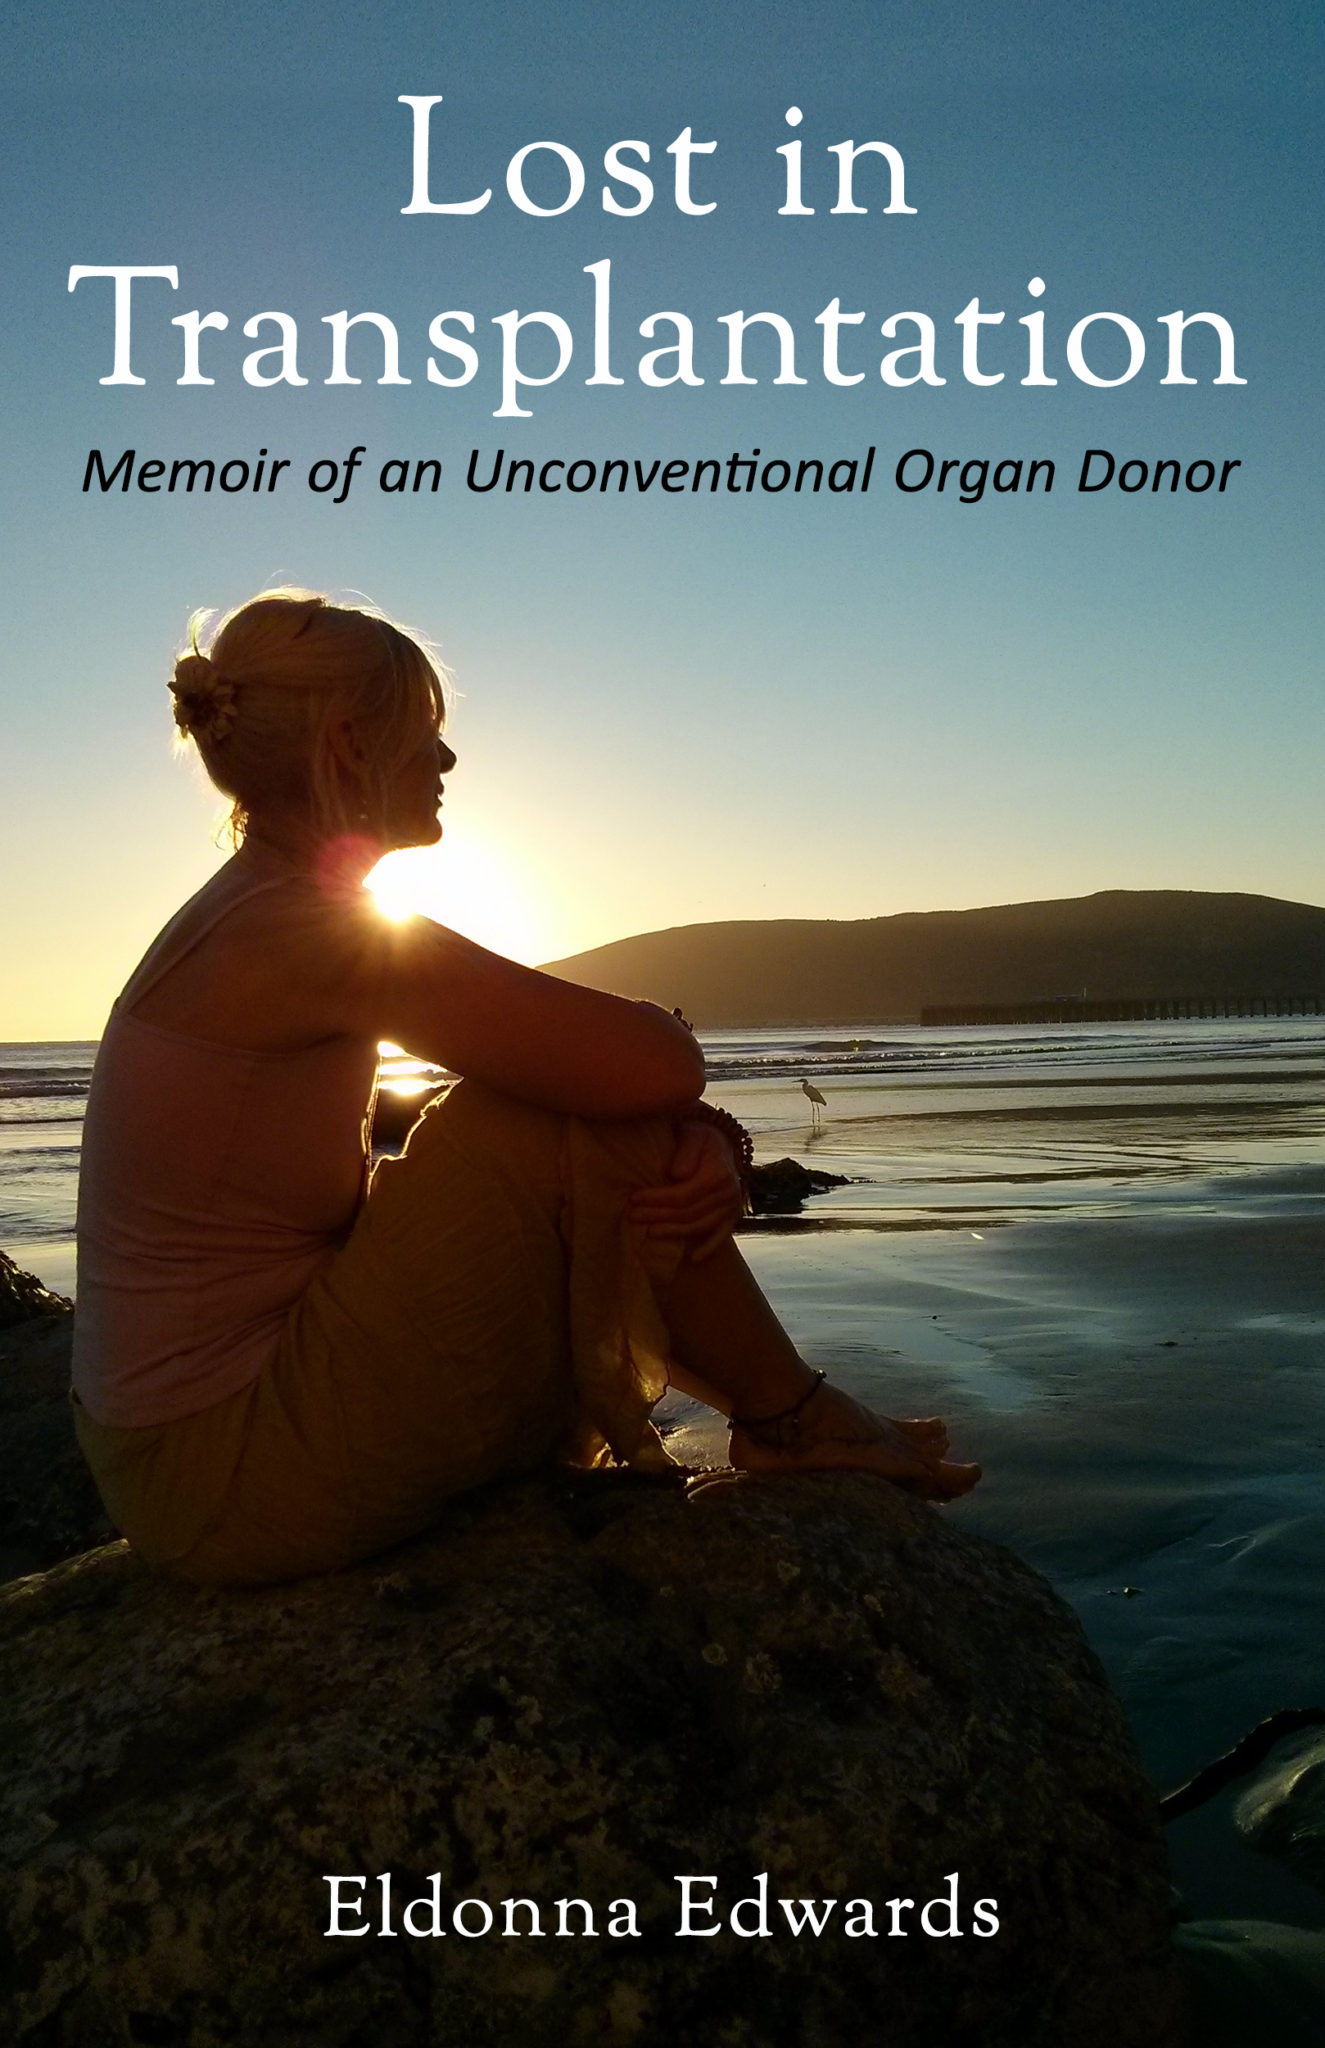 Lost in Transplantation: Memoir of an Unconventional Organ Donor by Eldonna Edwards